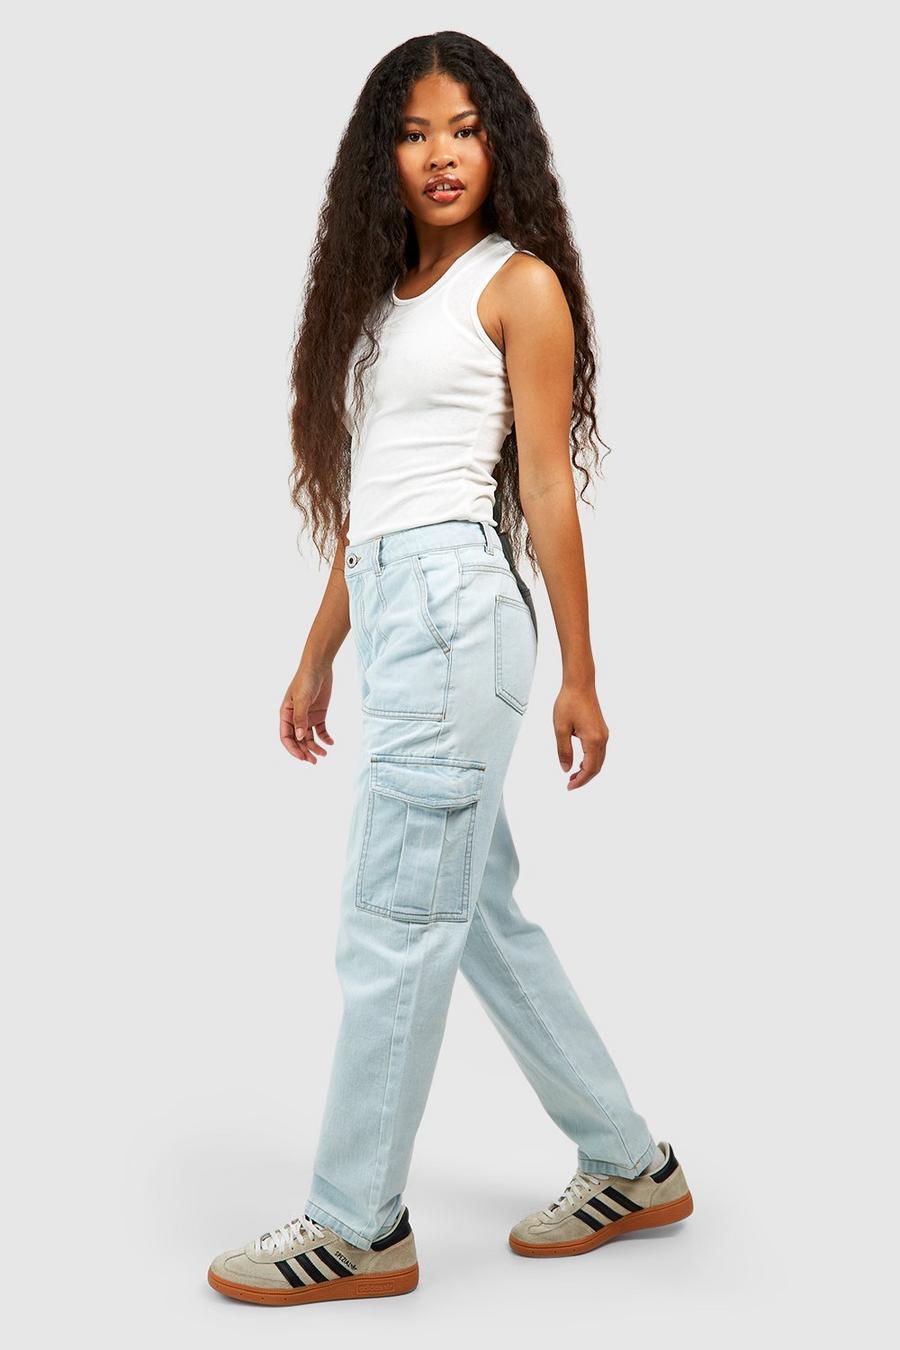 XIAOFFENN Loose Jeans For Women Petite Jeans For Women Petite Length Women  Fashion High Waist Wide Leg Stretch Thin Stitching Denim Flared Pants Denim